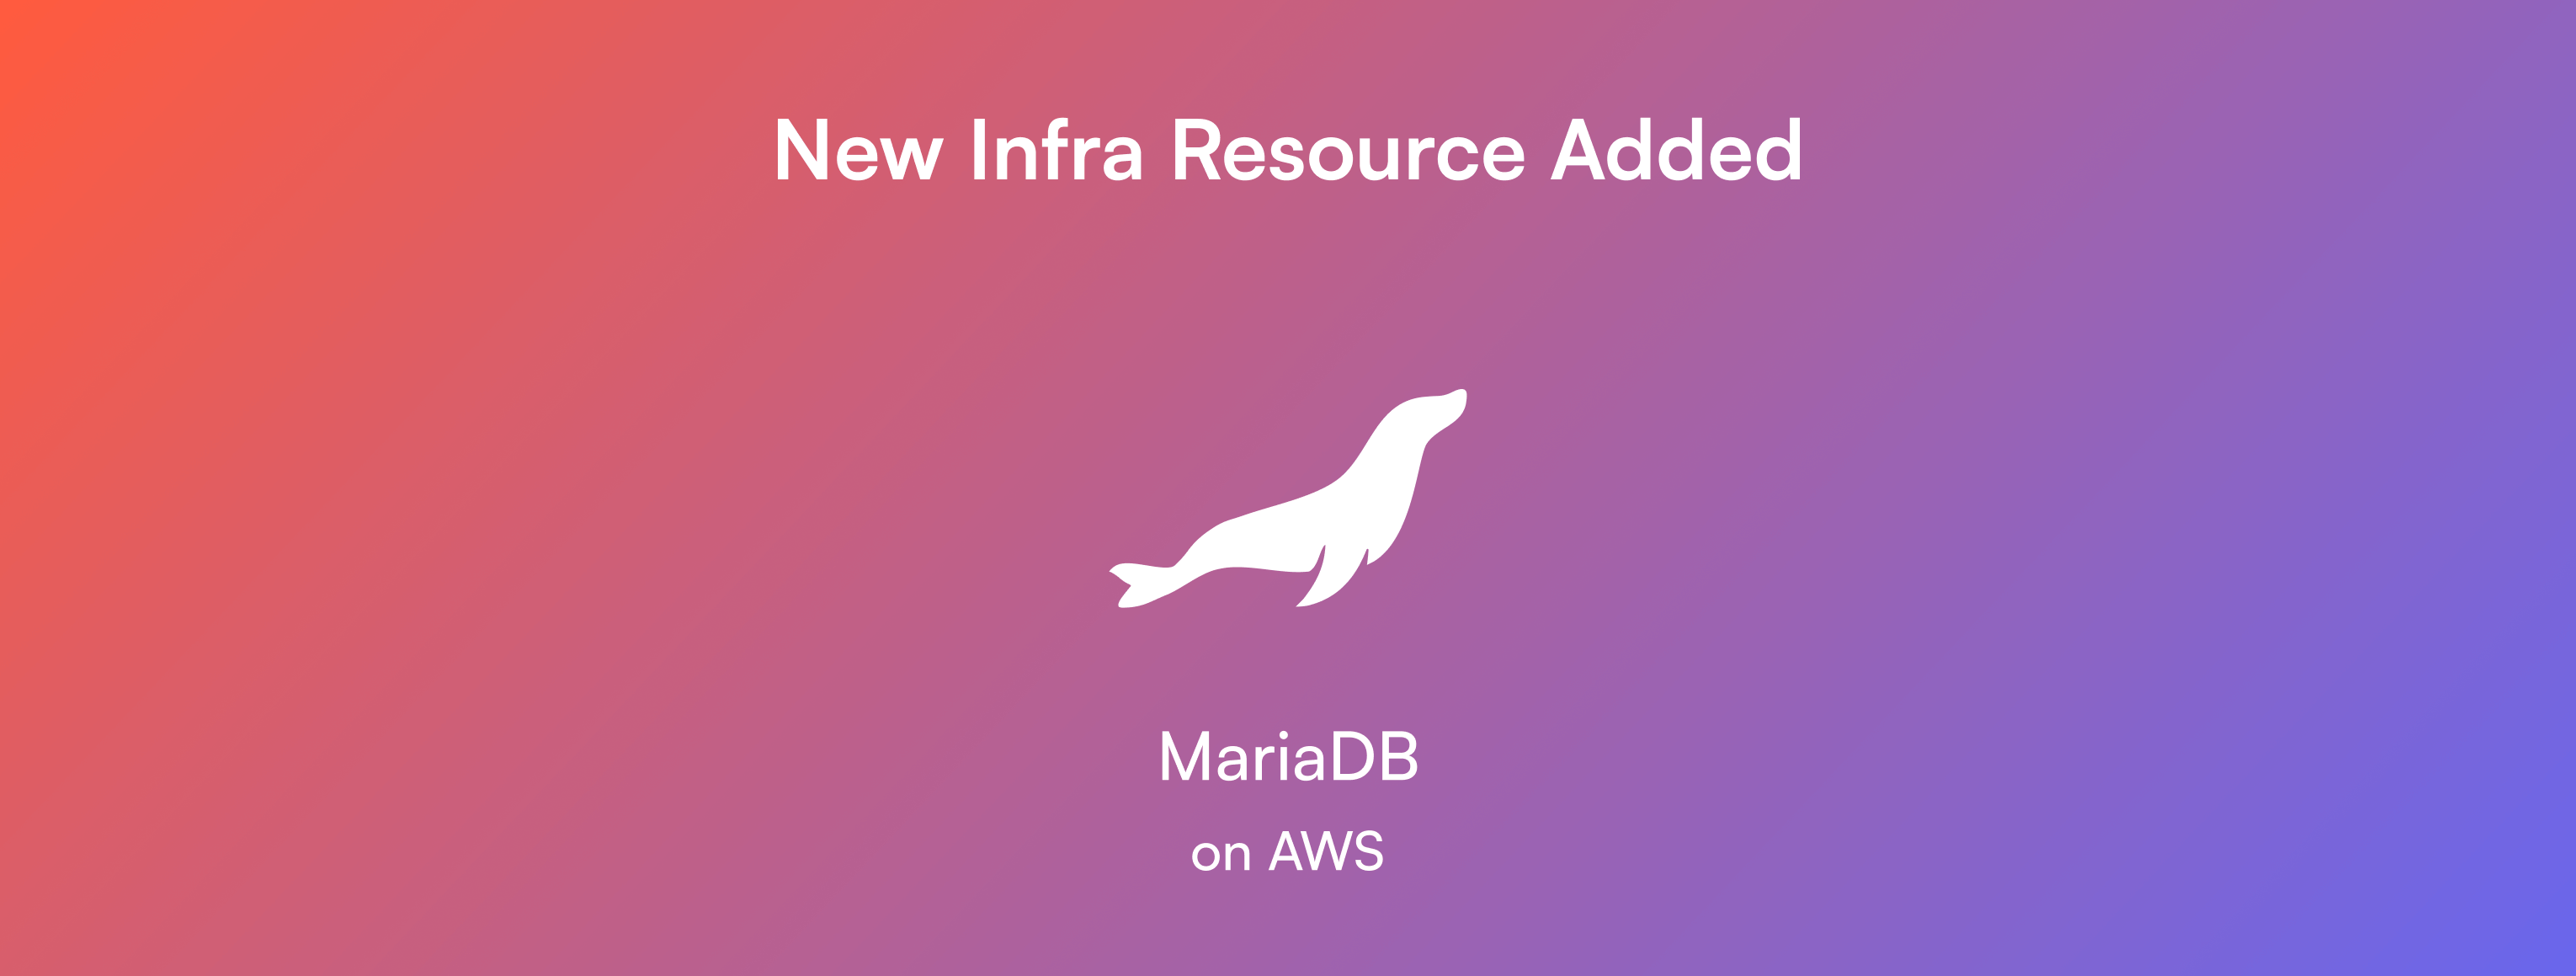 New MariaDB resource added